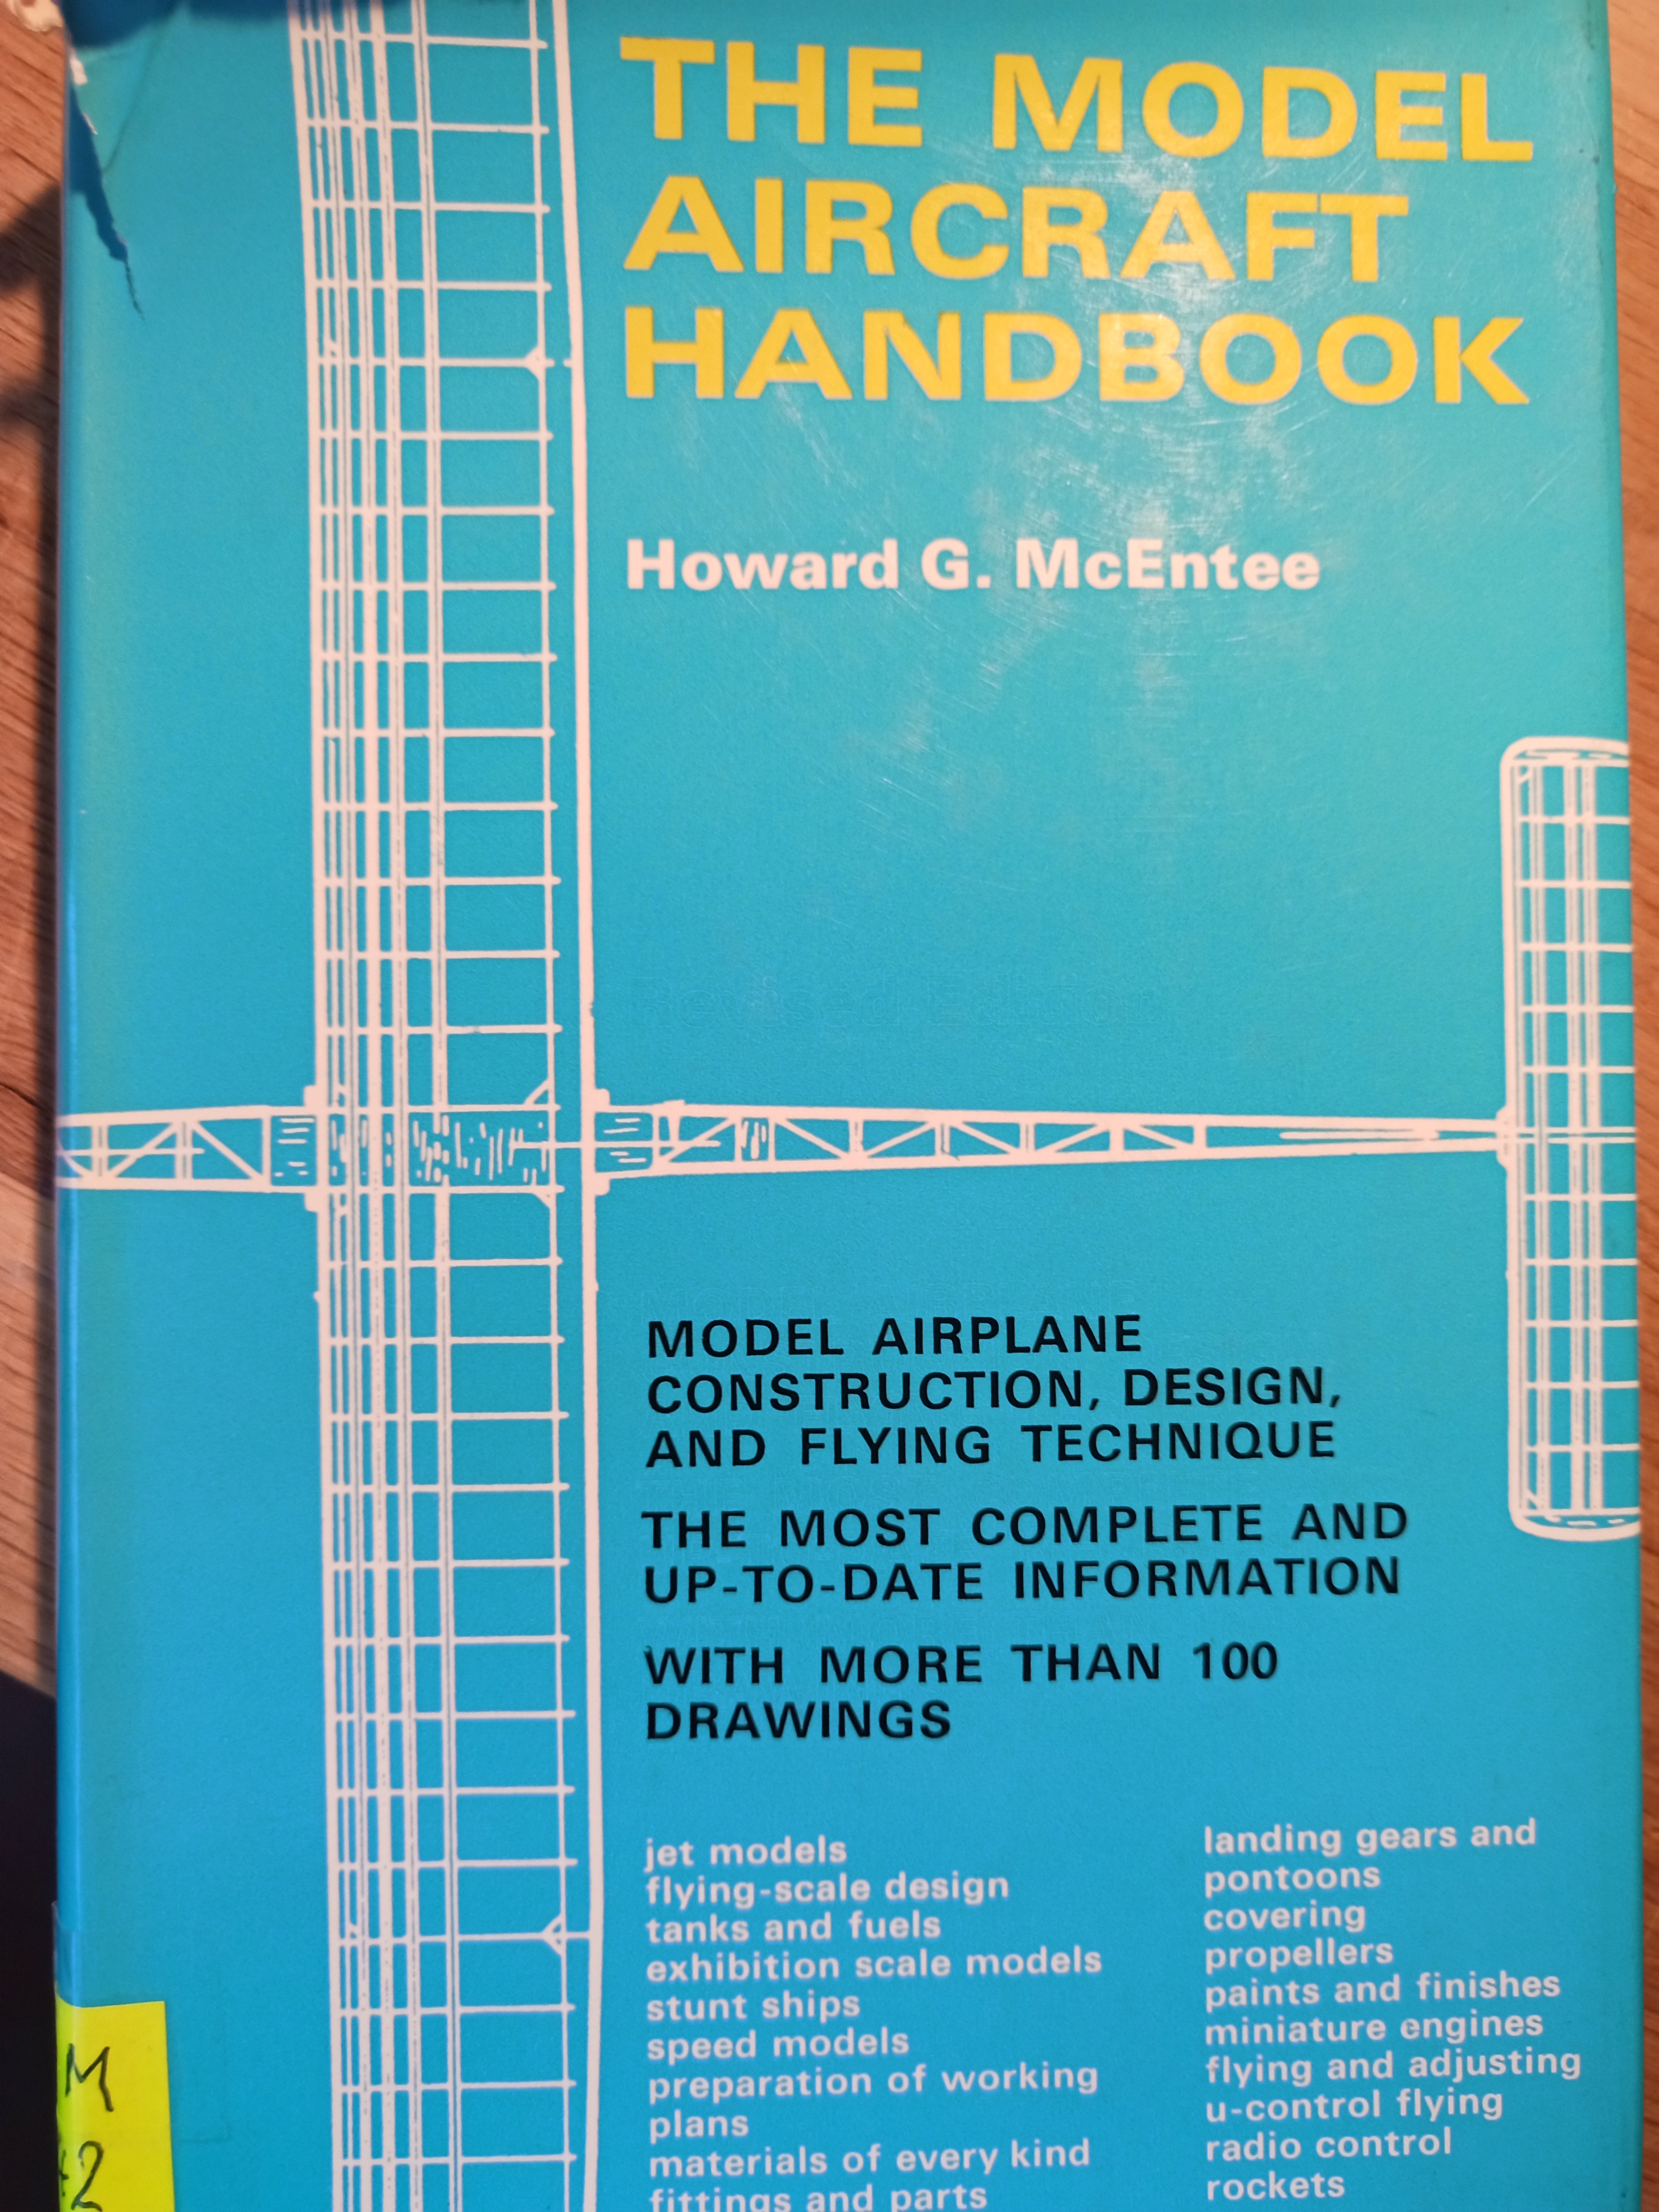 The Model Aircraft Handbook (Deutsches Segelflugmuseum mit Modellflug CC BY-NC-SA)